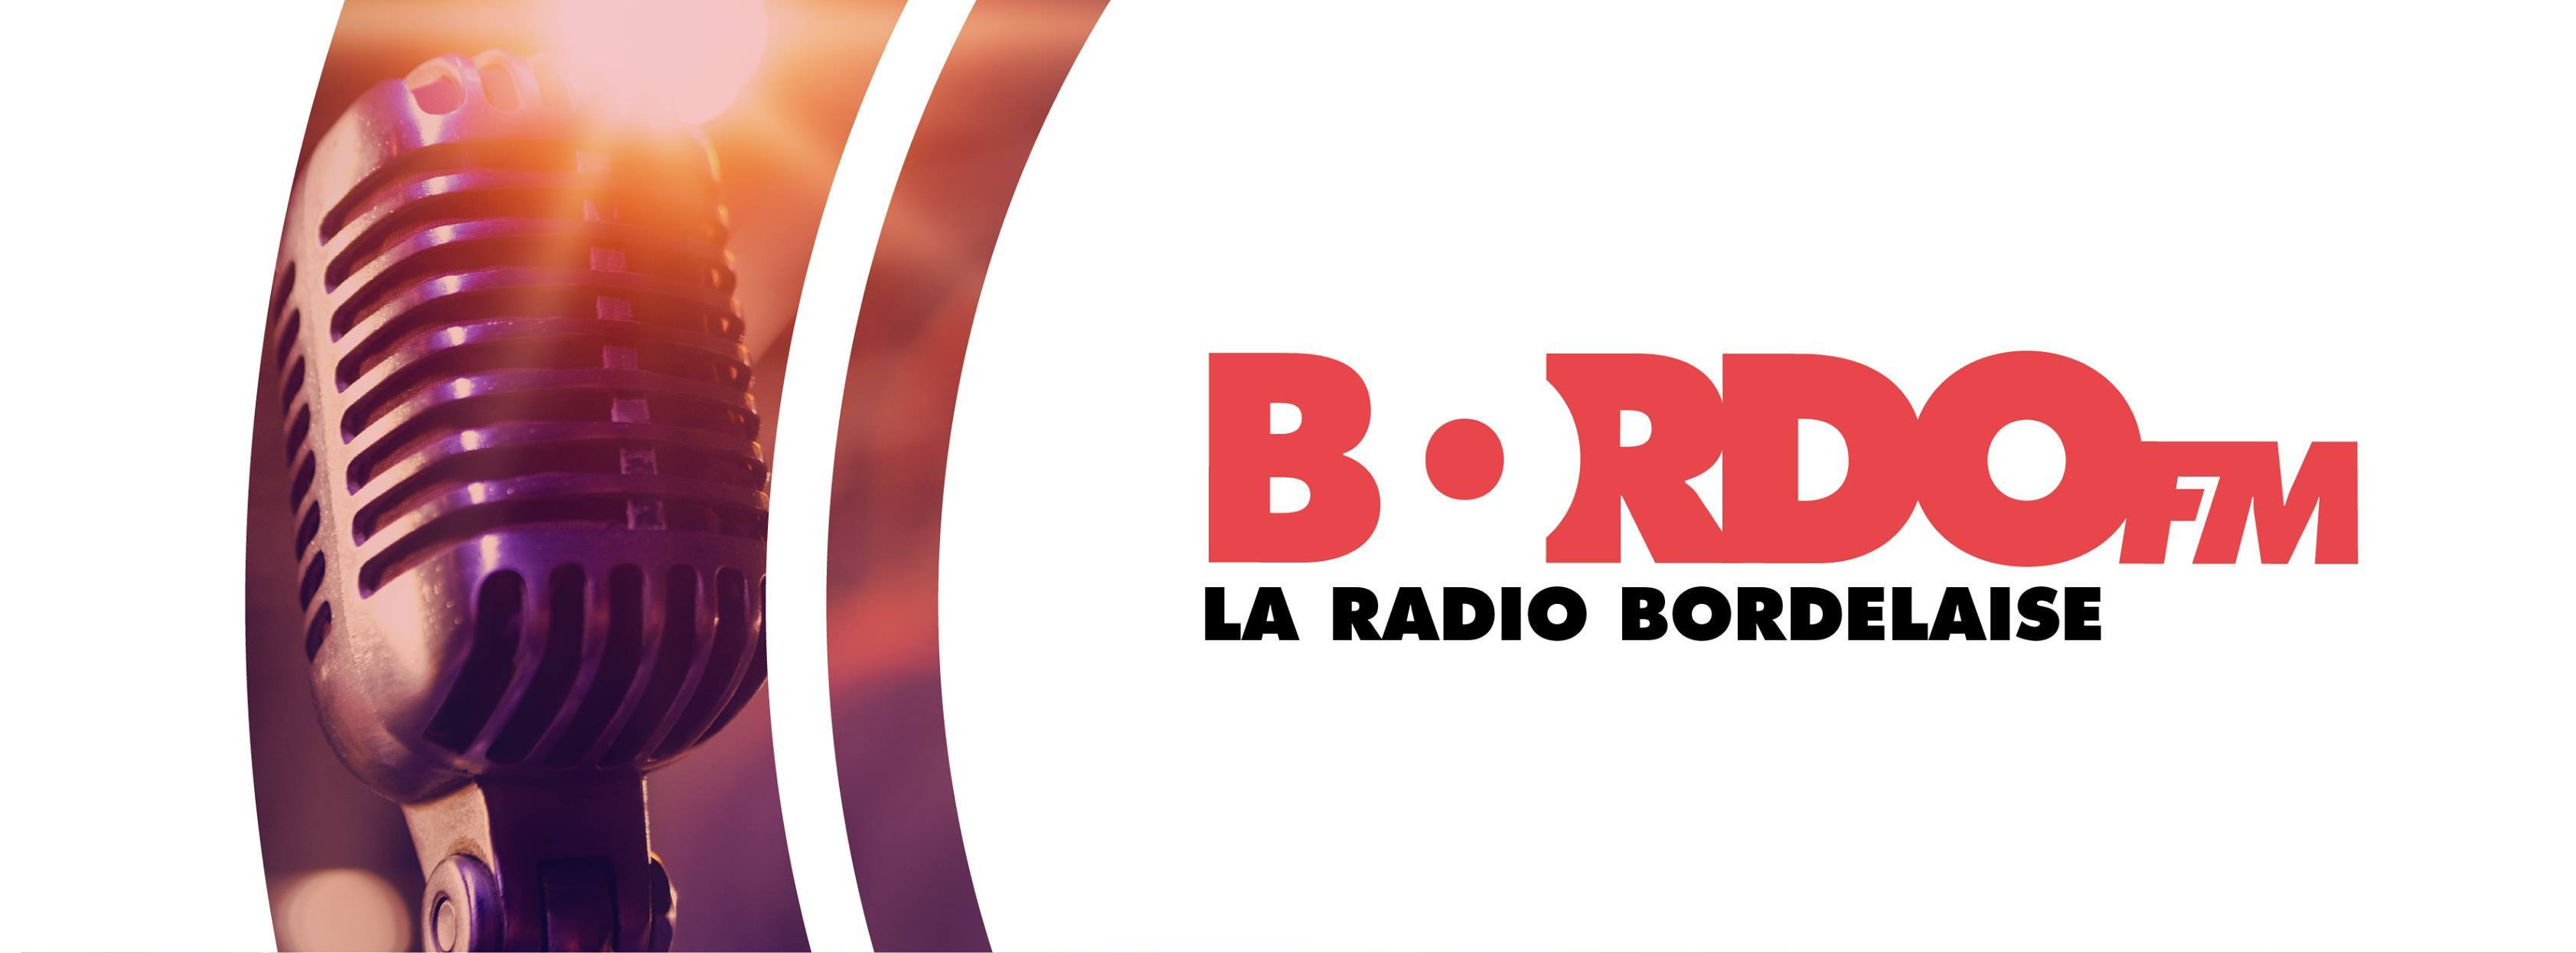 Association Dans La Vague Plurimédia  Radio BORDO FM